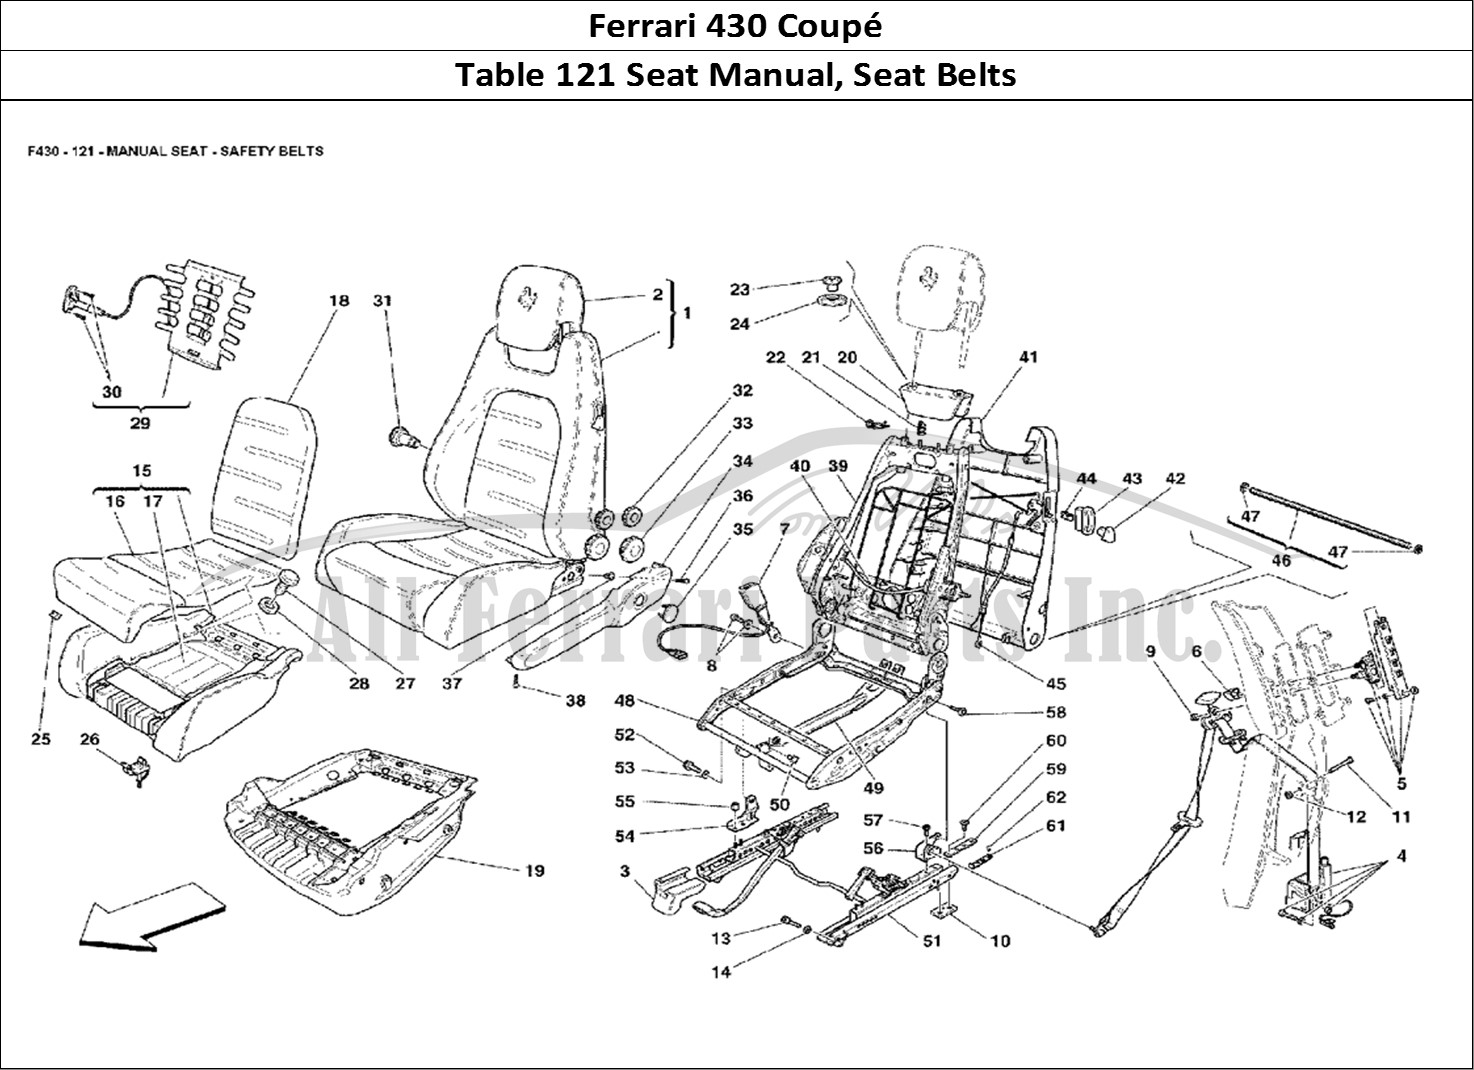 Ferrari Parts Ferrari 430 Coup Page 121 Manual Seat - Safety Belt